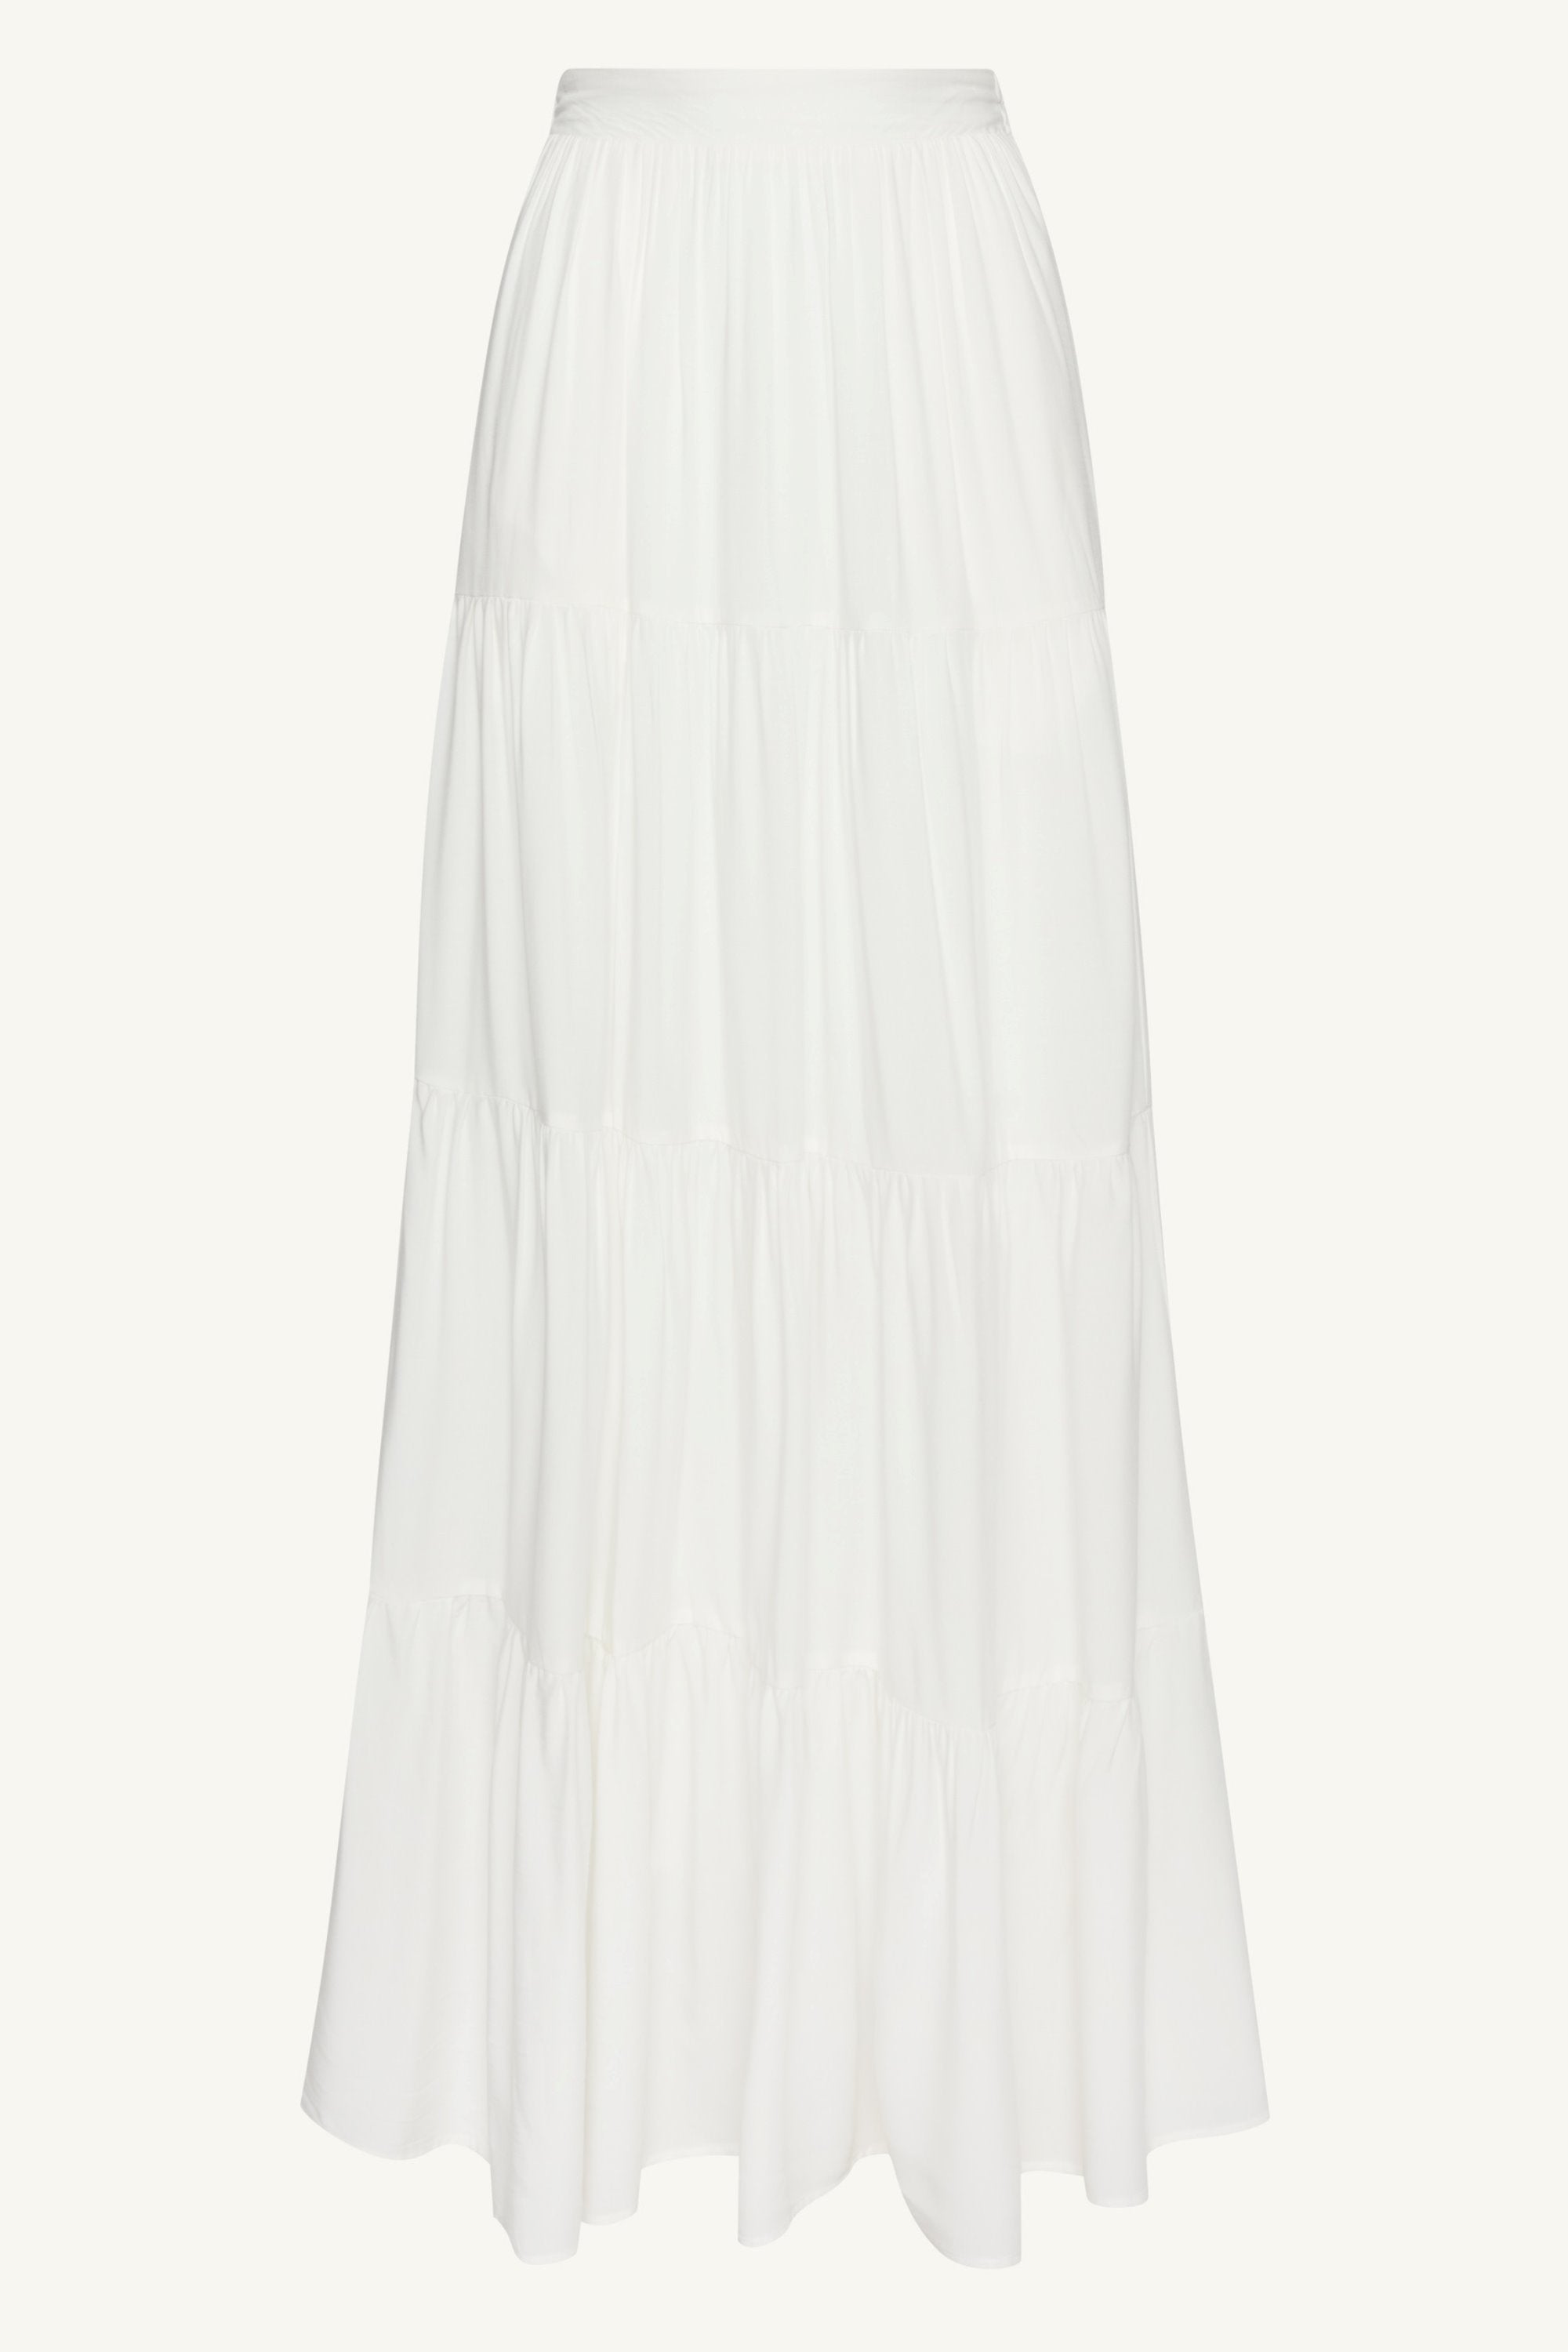 Sana Maxi Skirt - White Clothing Veiled 